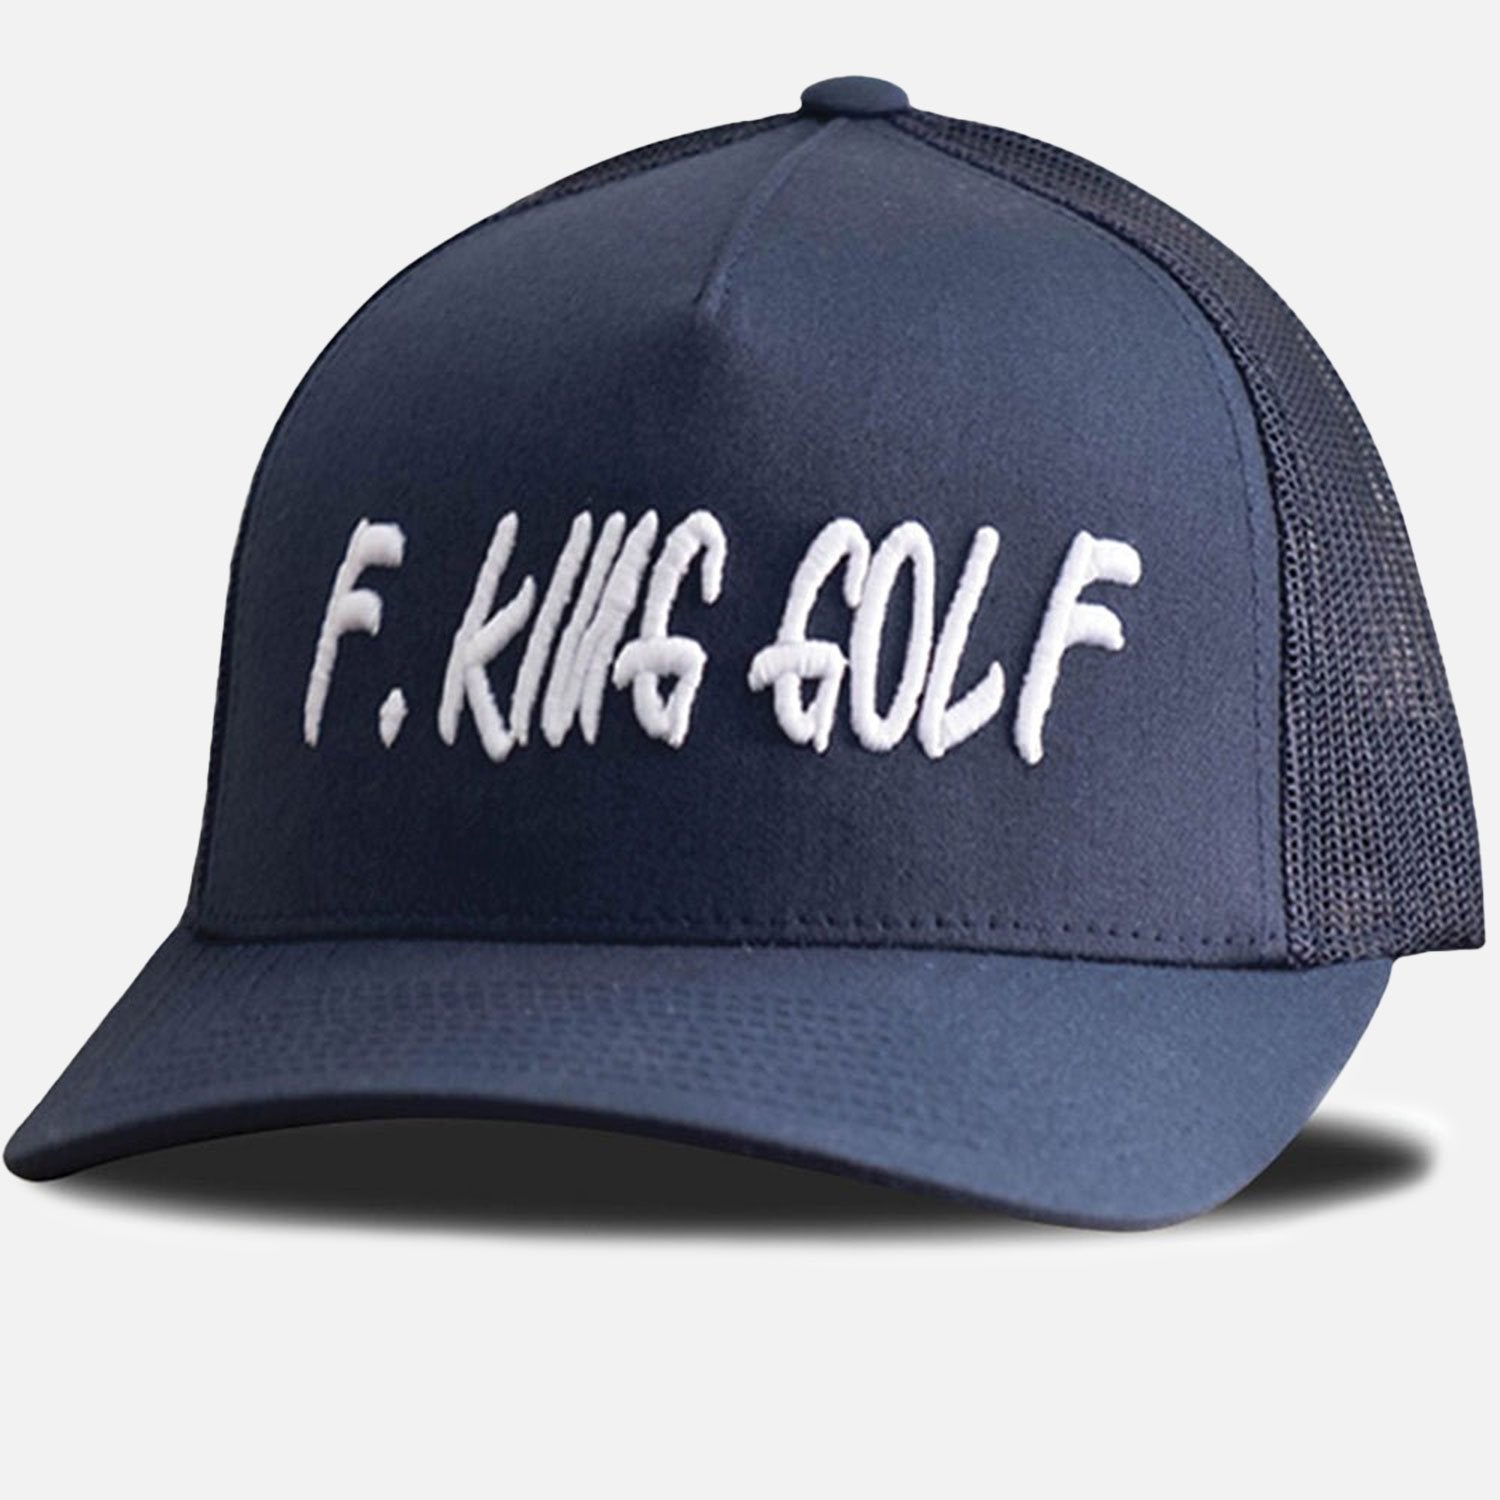 Golf Hats, Golf Visors, Fitted, Snapback